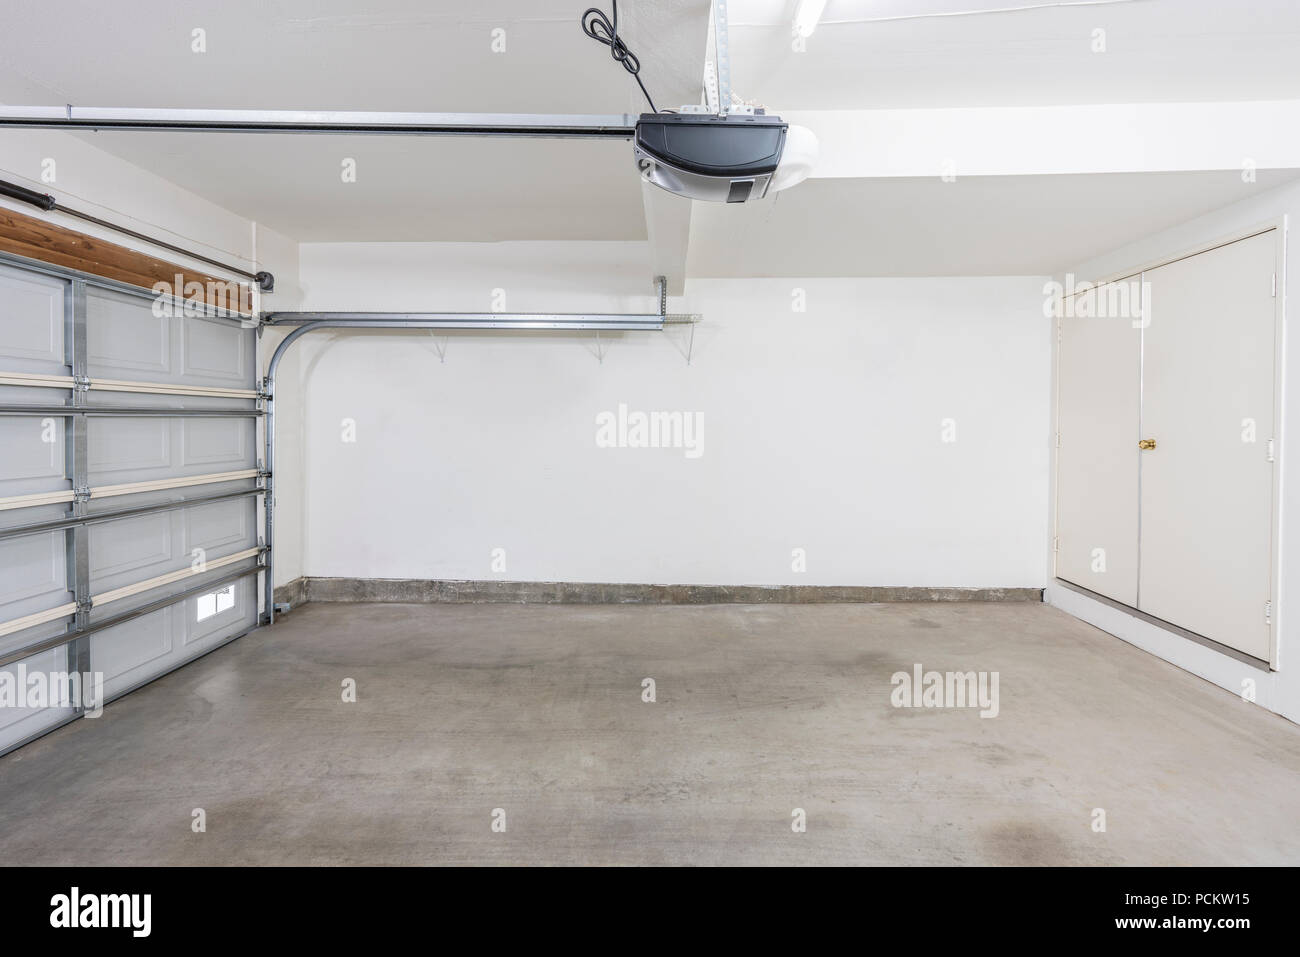 Completely empty two car suburban garage interior. Stock Photo